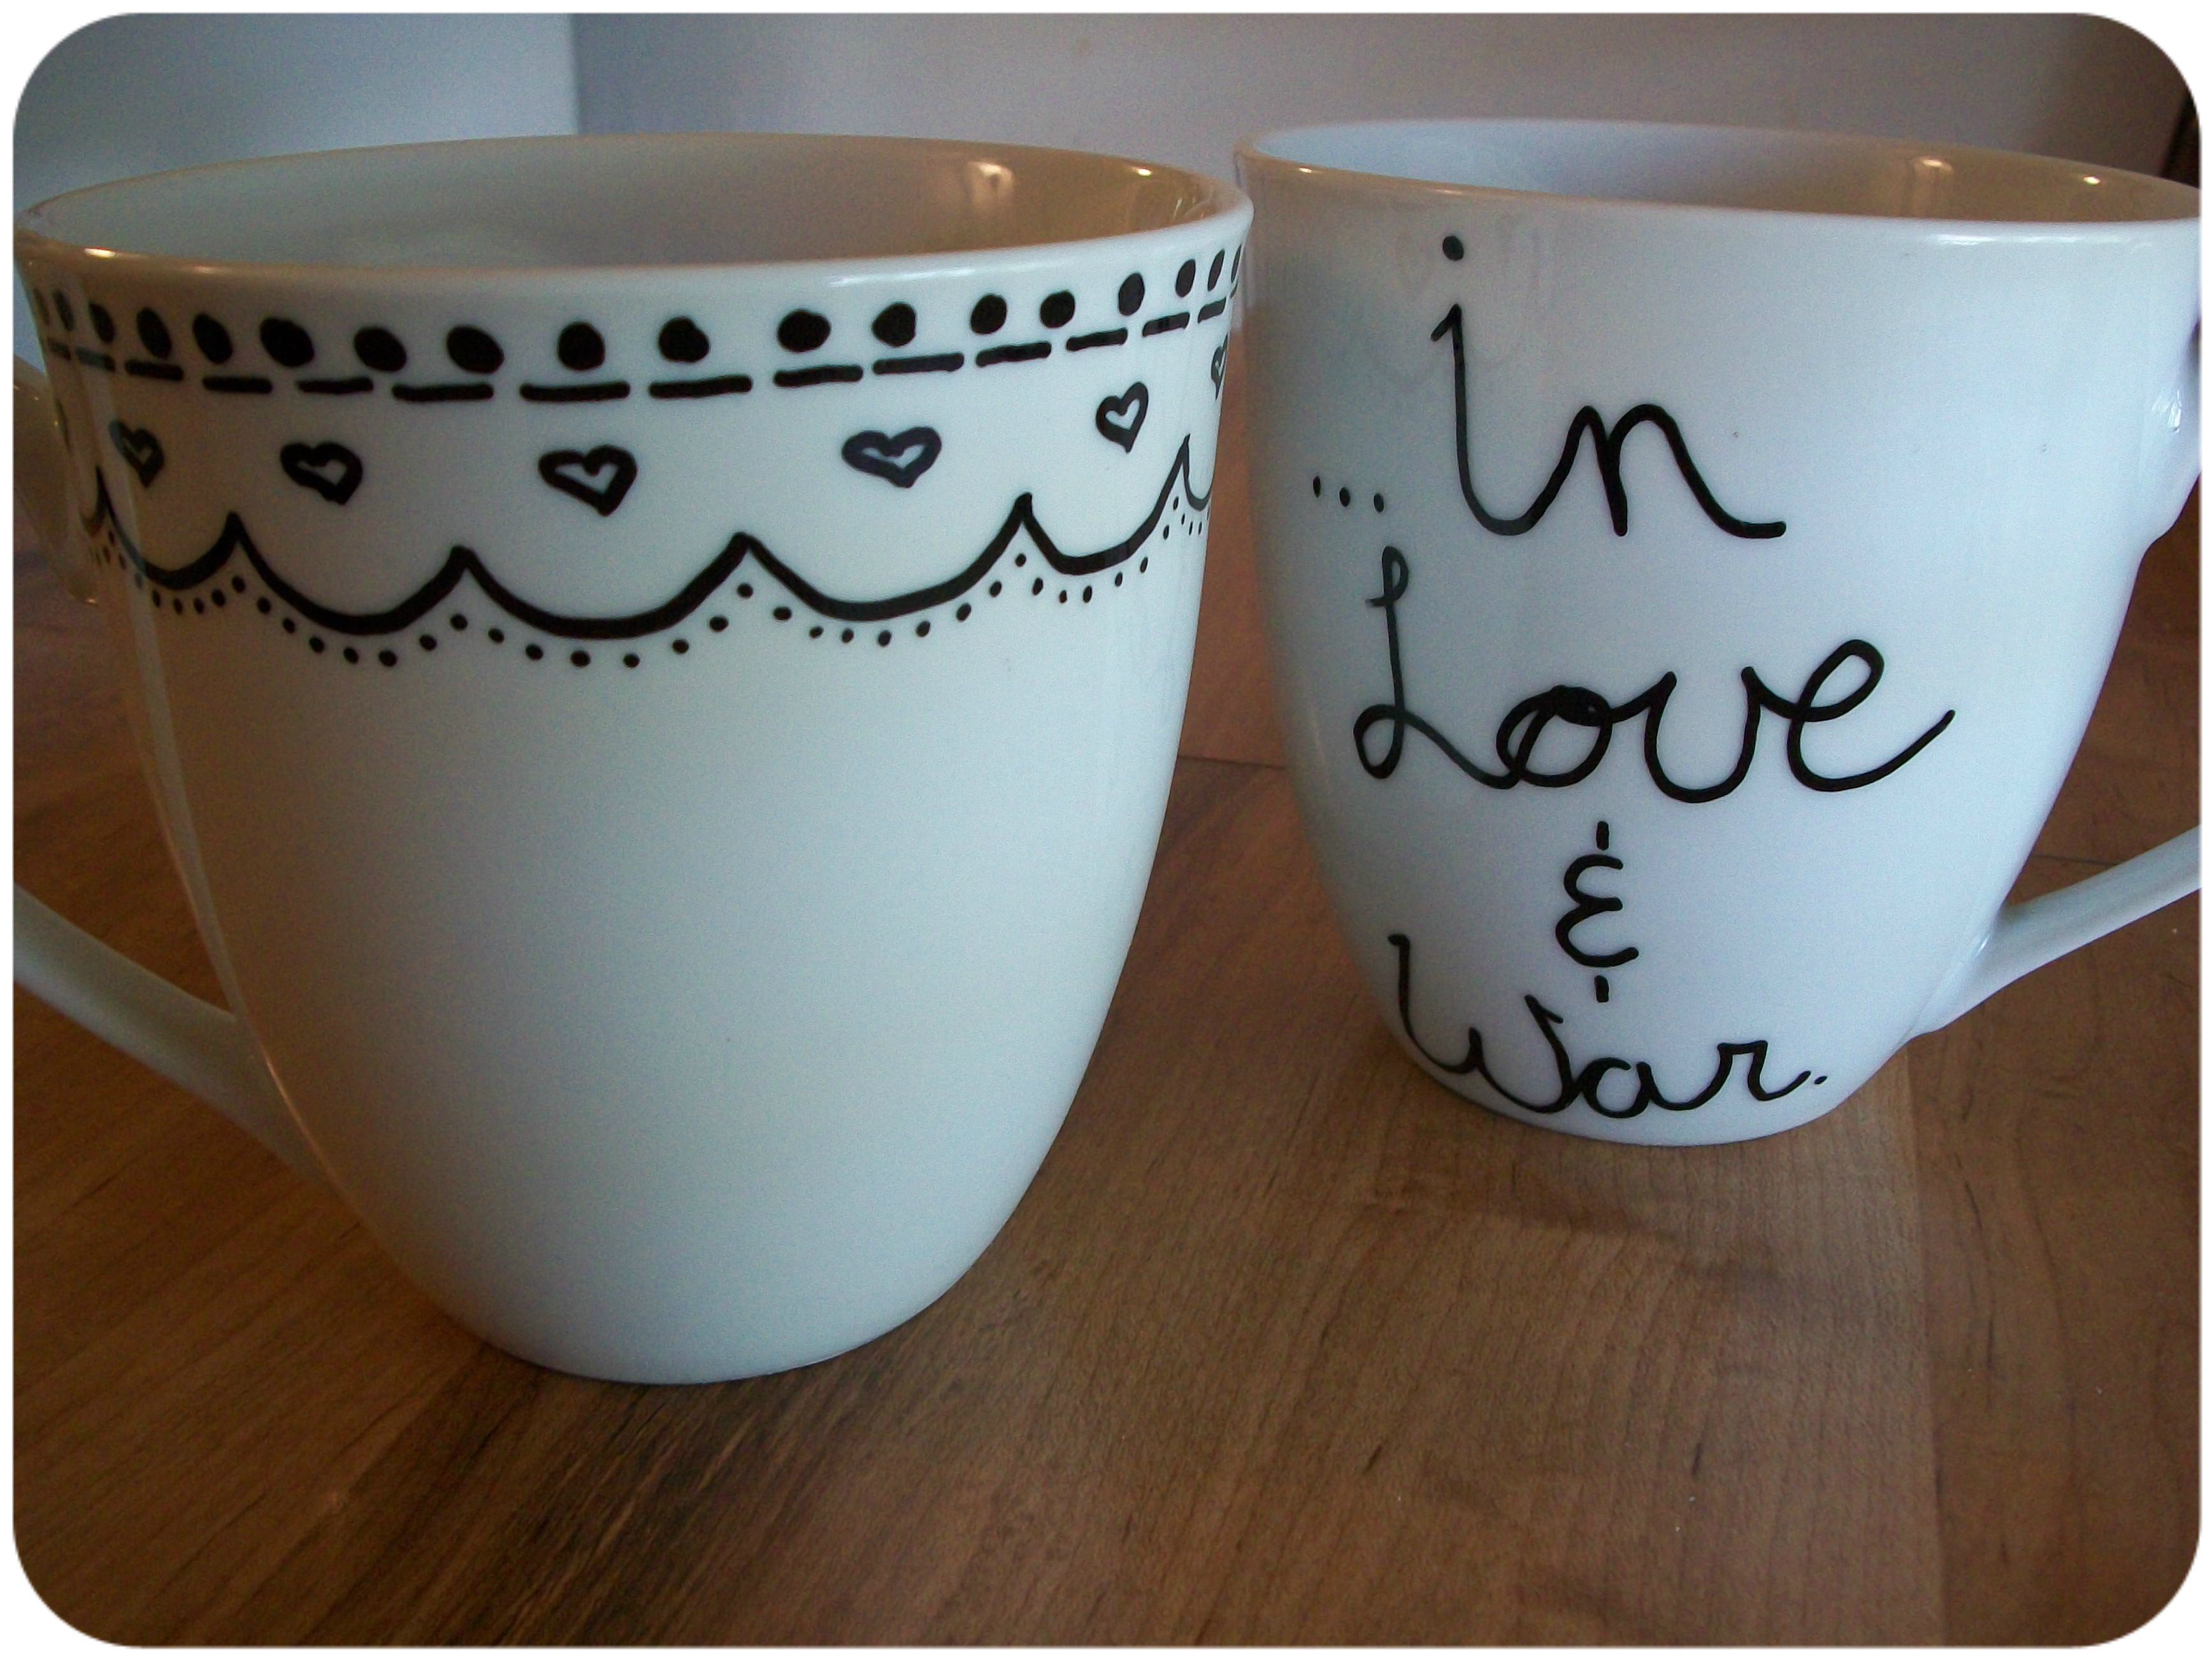 Best ideas about DIY Coffee Mugs
. Save or Pin DIY Sharpie Mug Now.